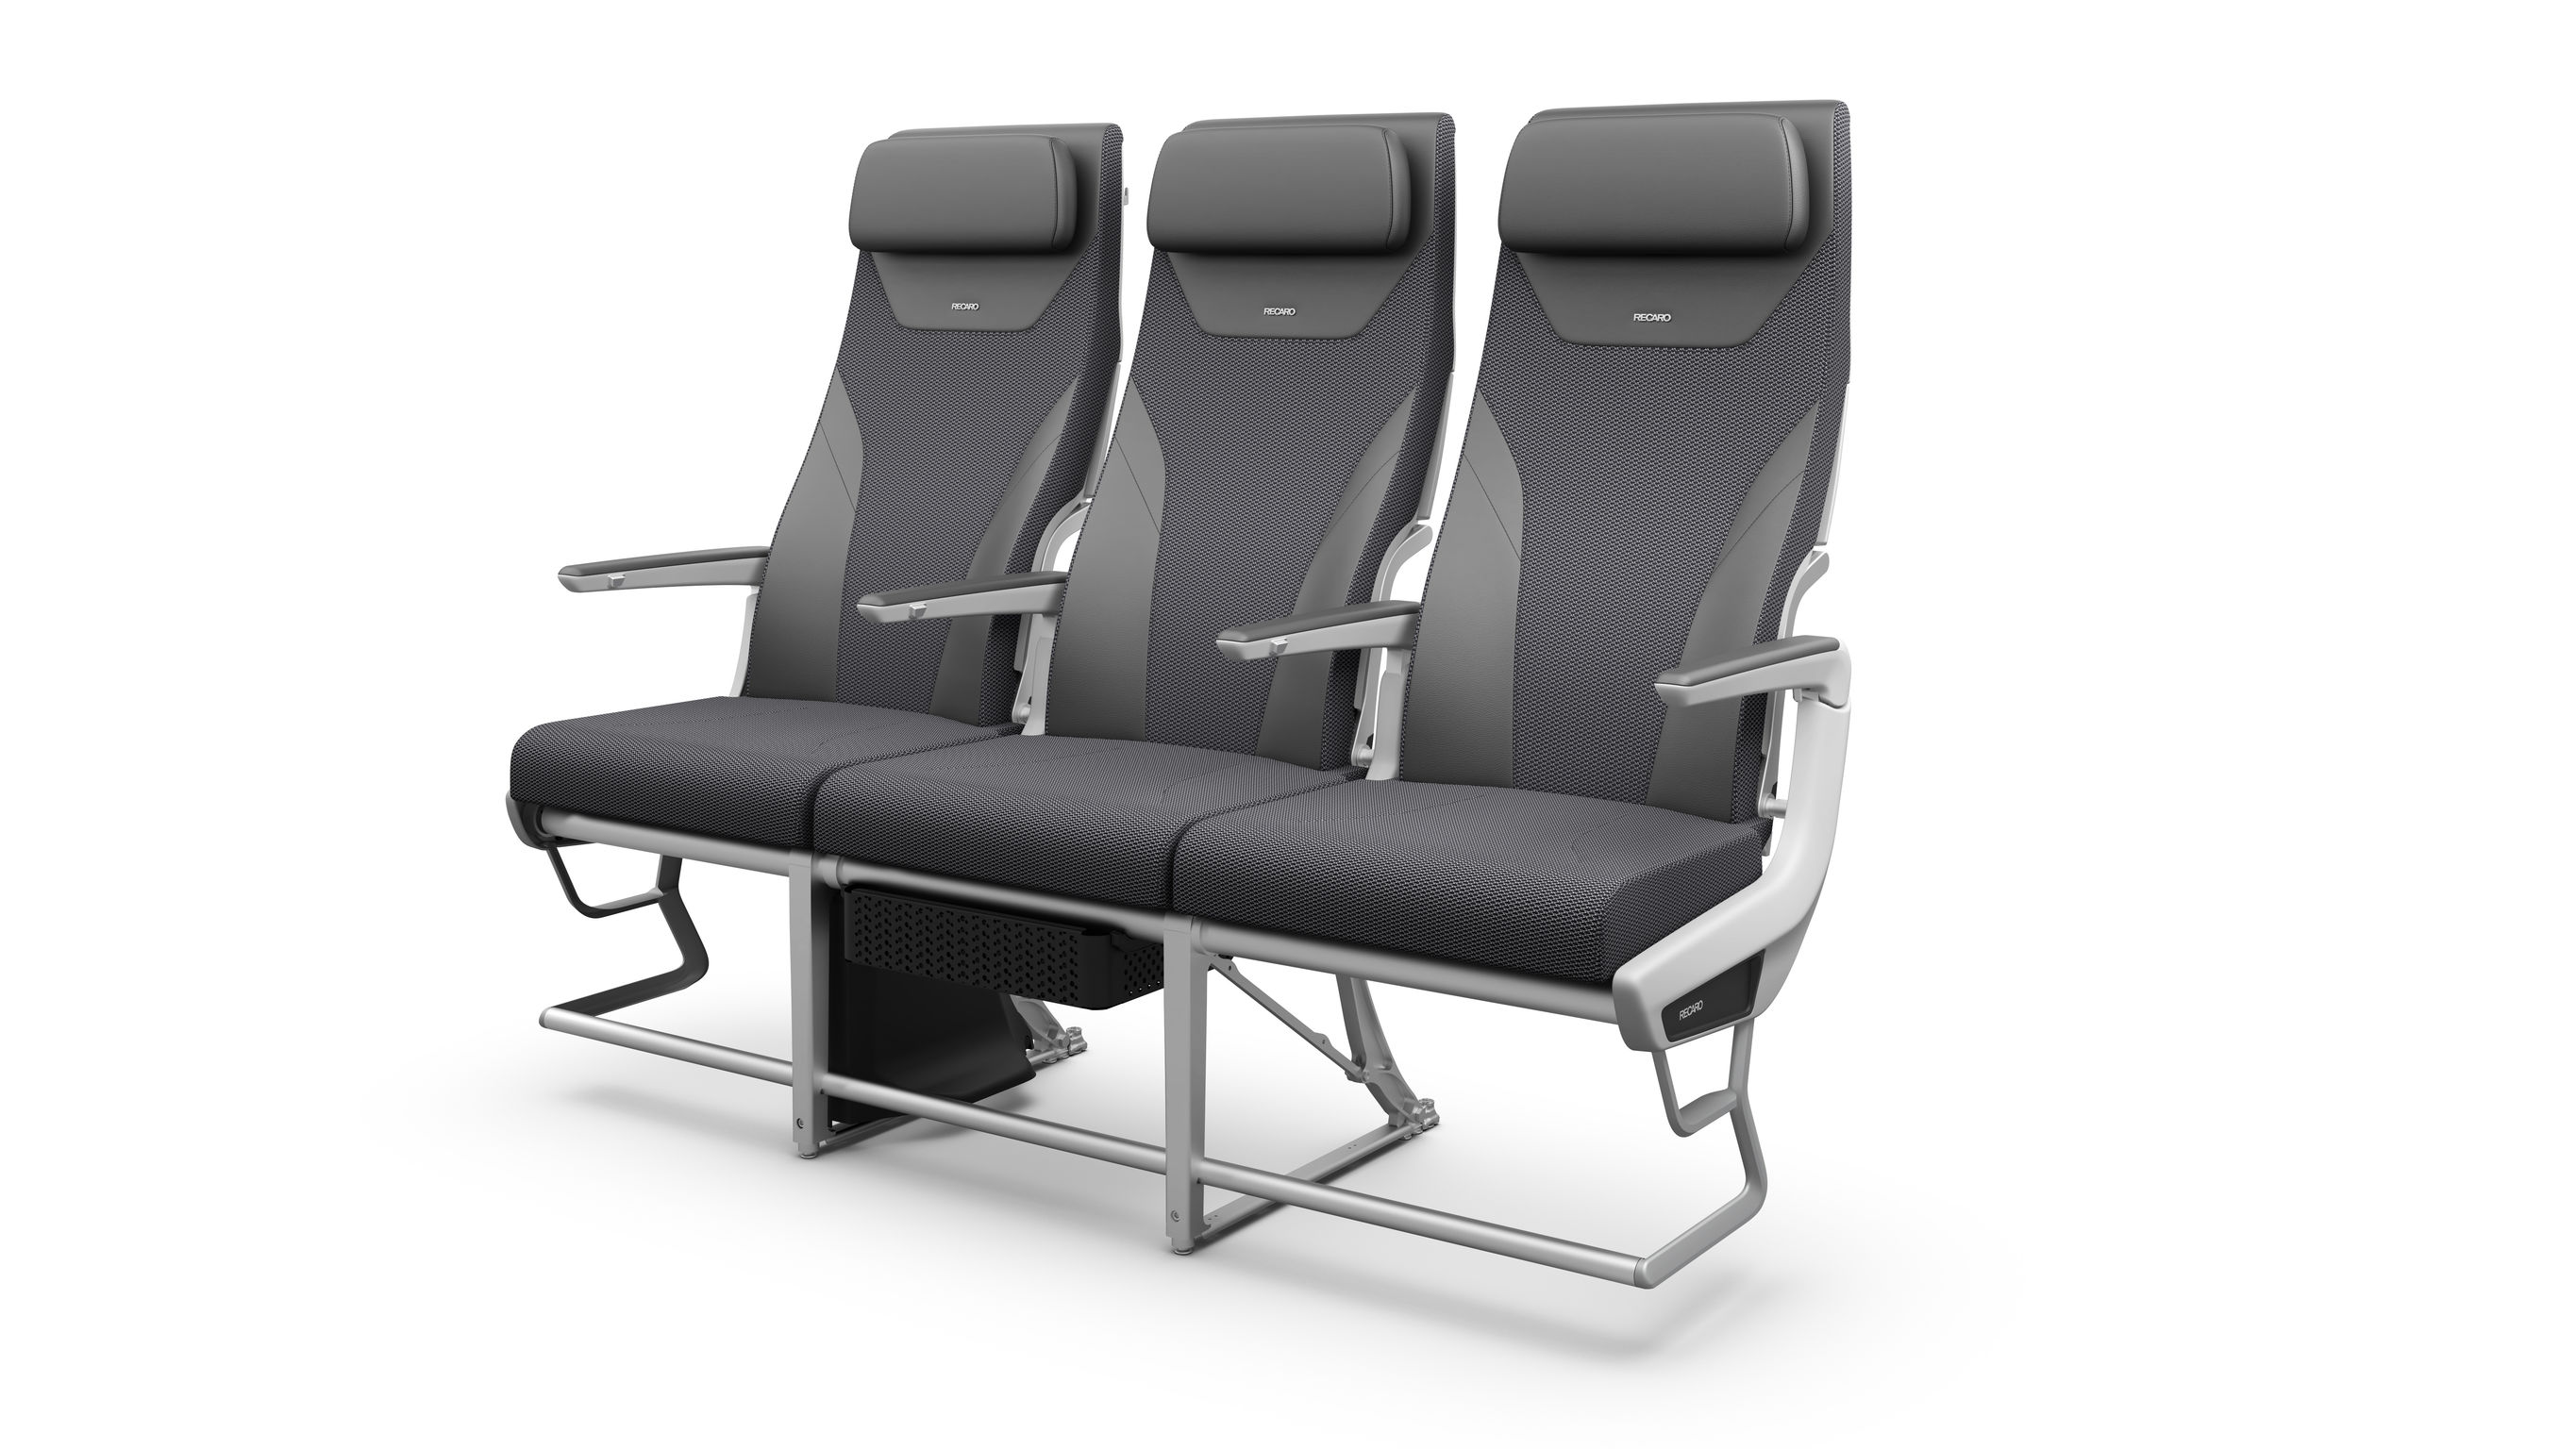 RECARO Aircraft Seating CL3810 Economy Class